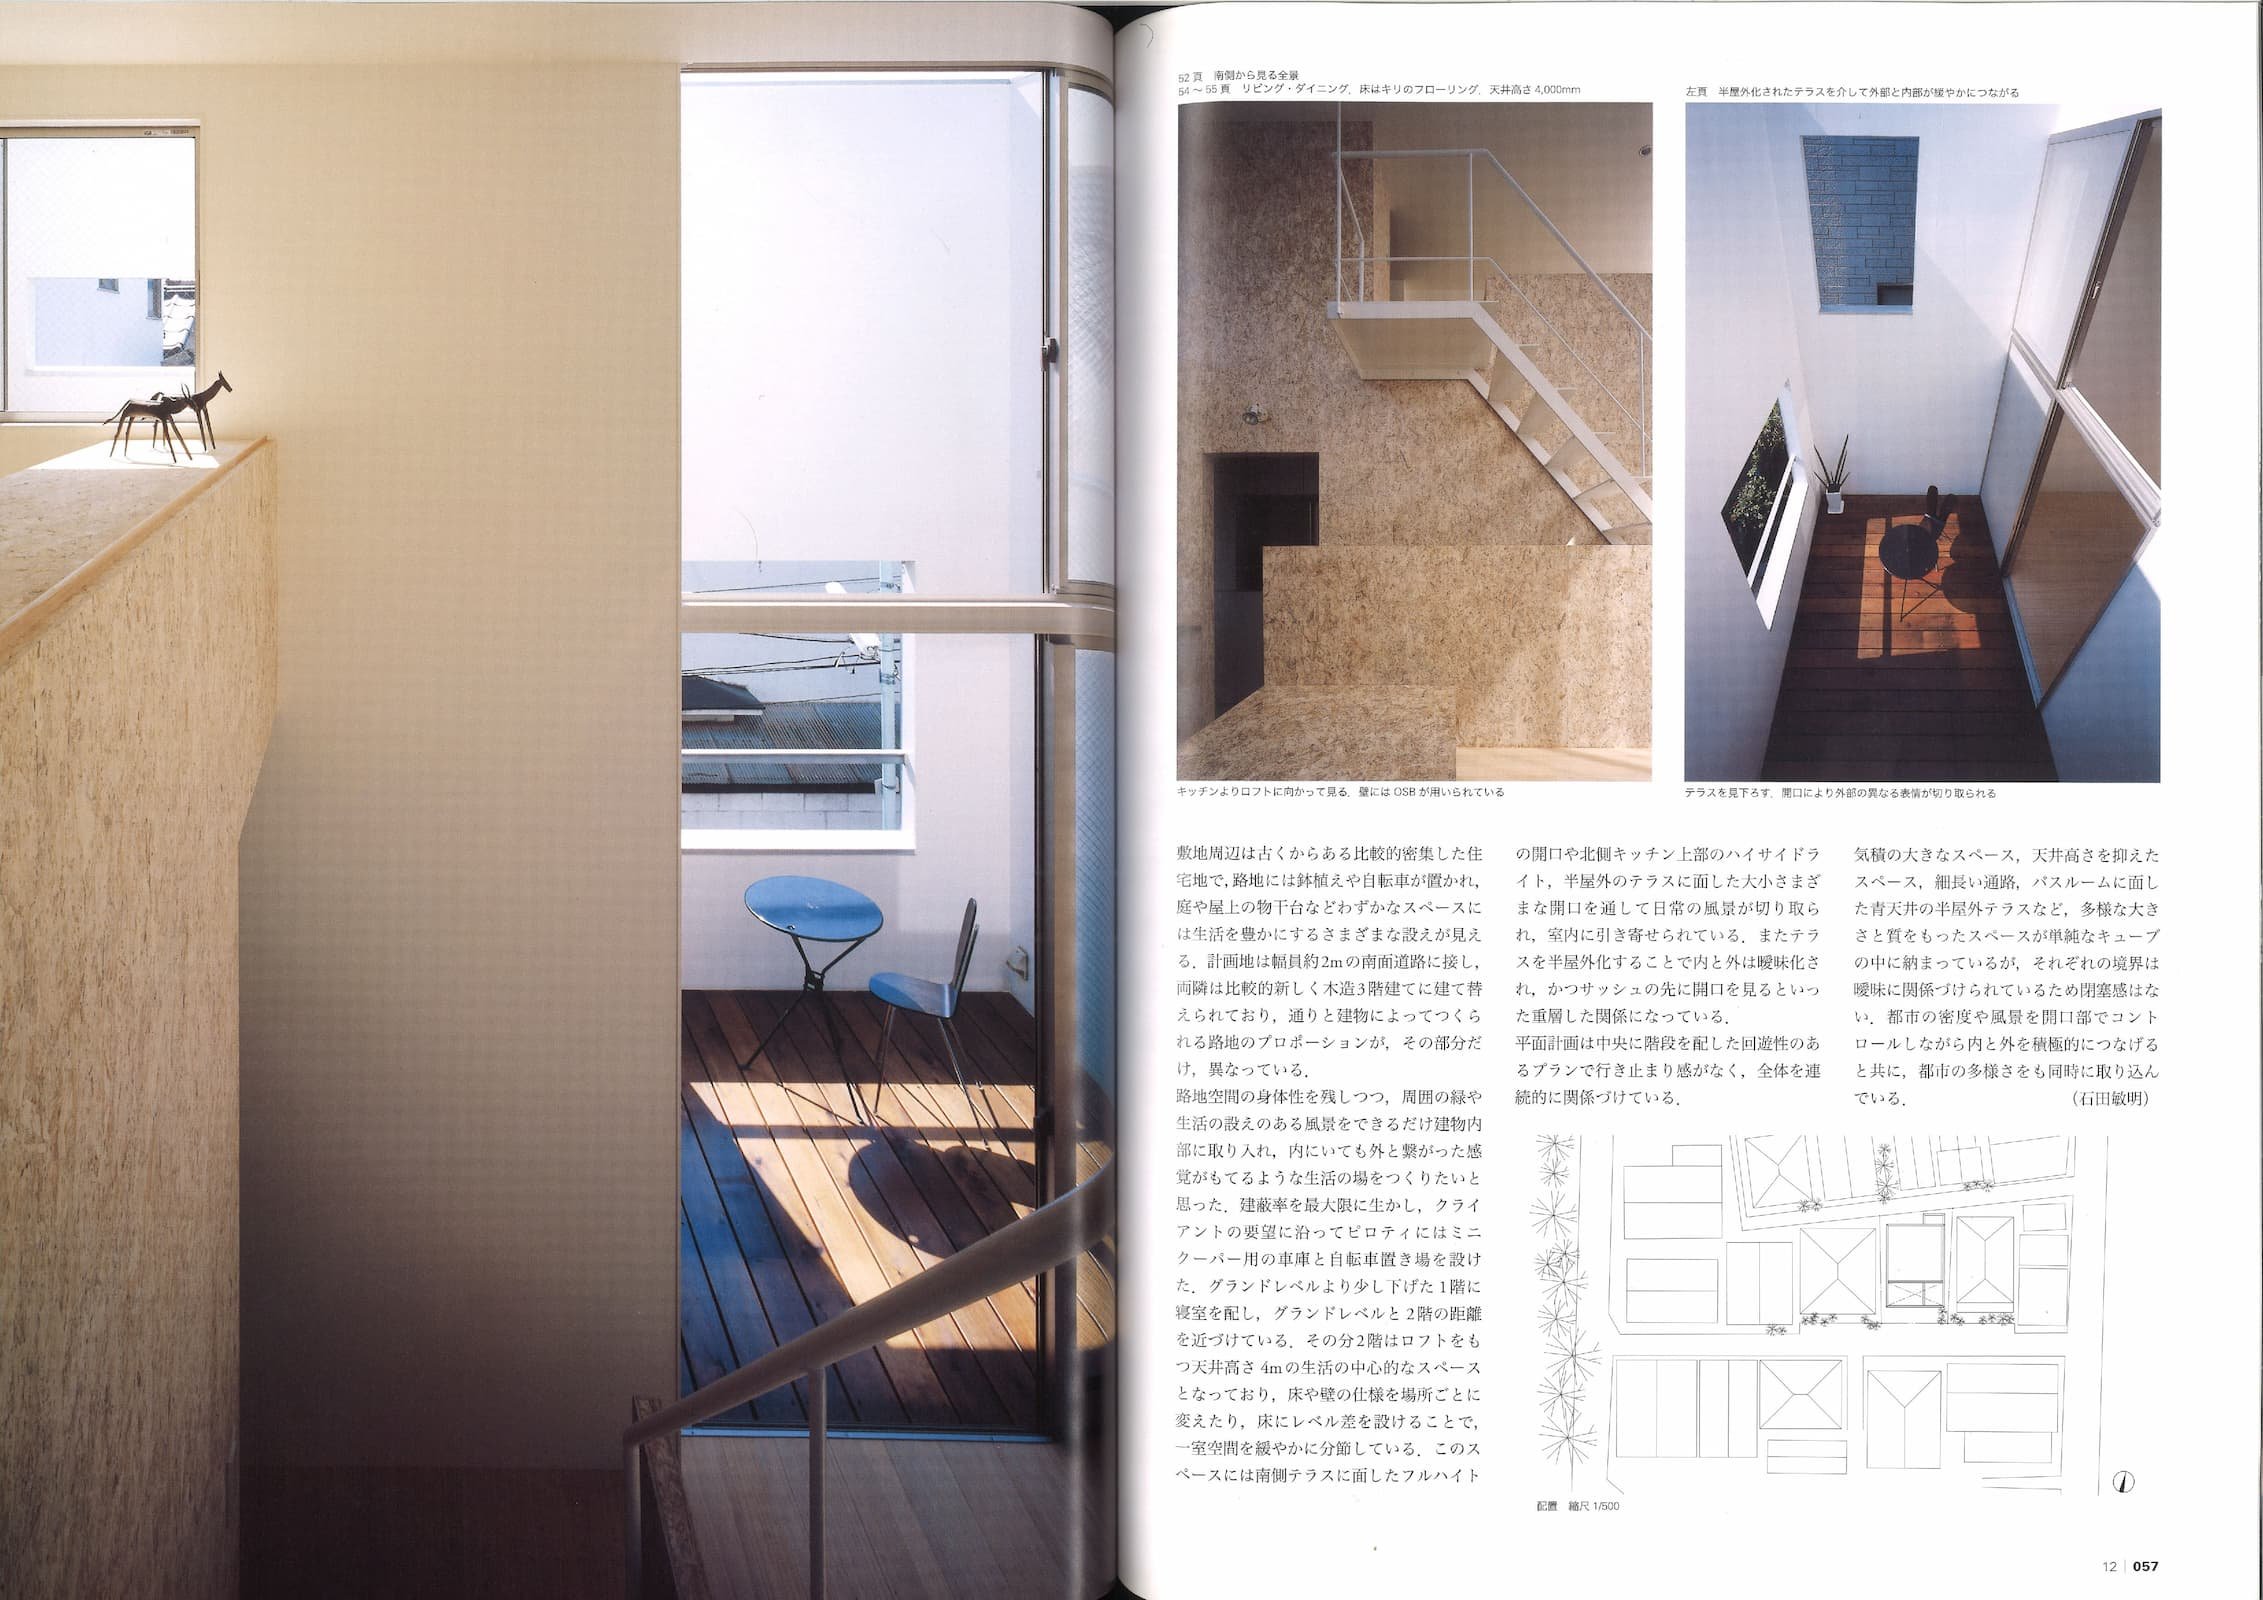 住宅特集 - Housing Special Feature 260 - FU House + Iron House_Page_4.jpg